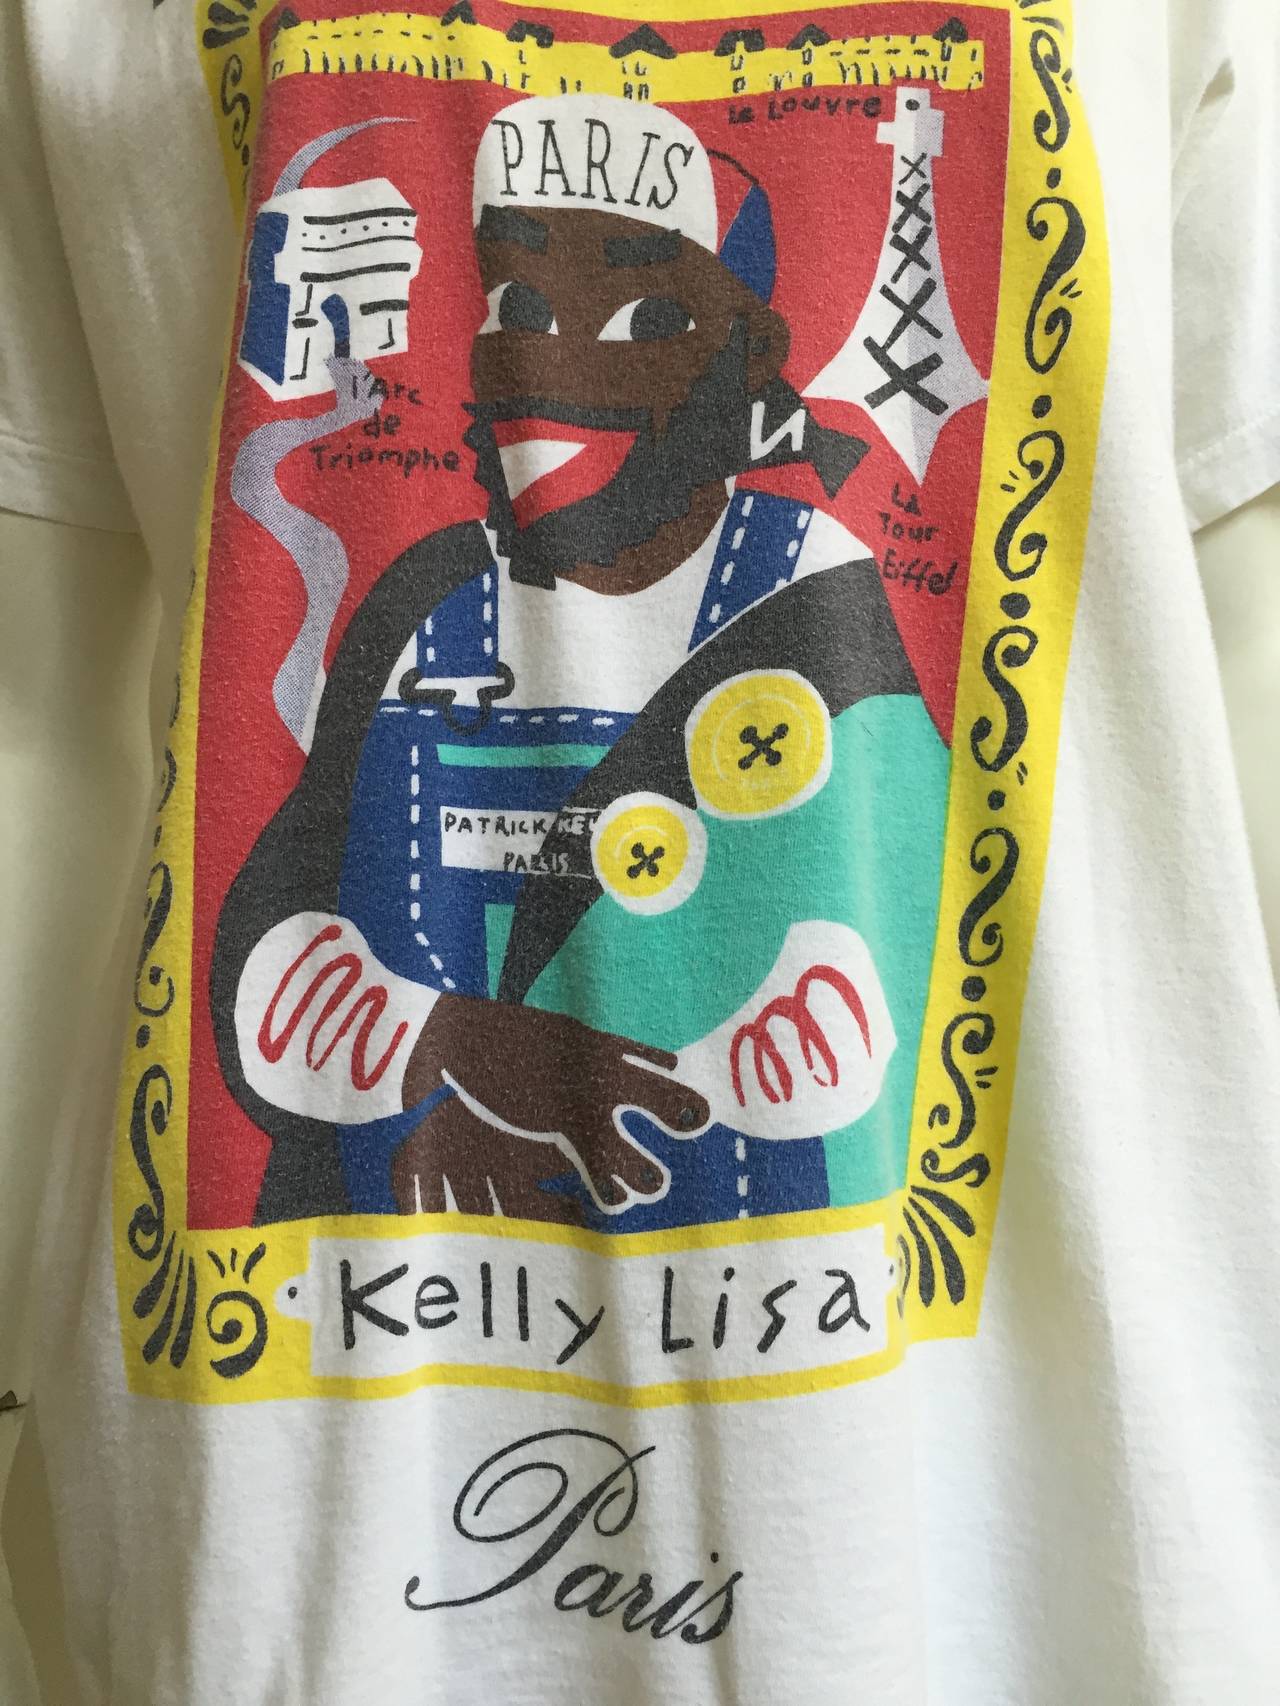 Gray Patrik Kelly 'Kelly Lisa' 1988 t-shirt.